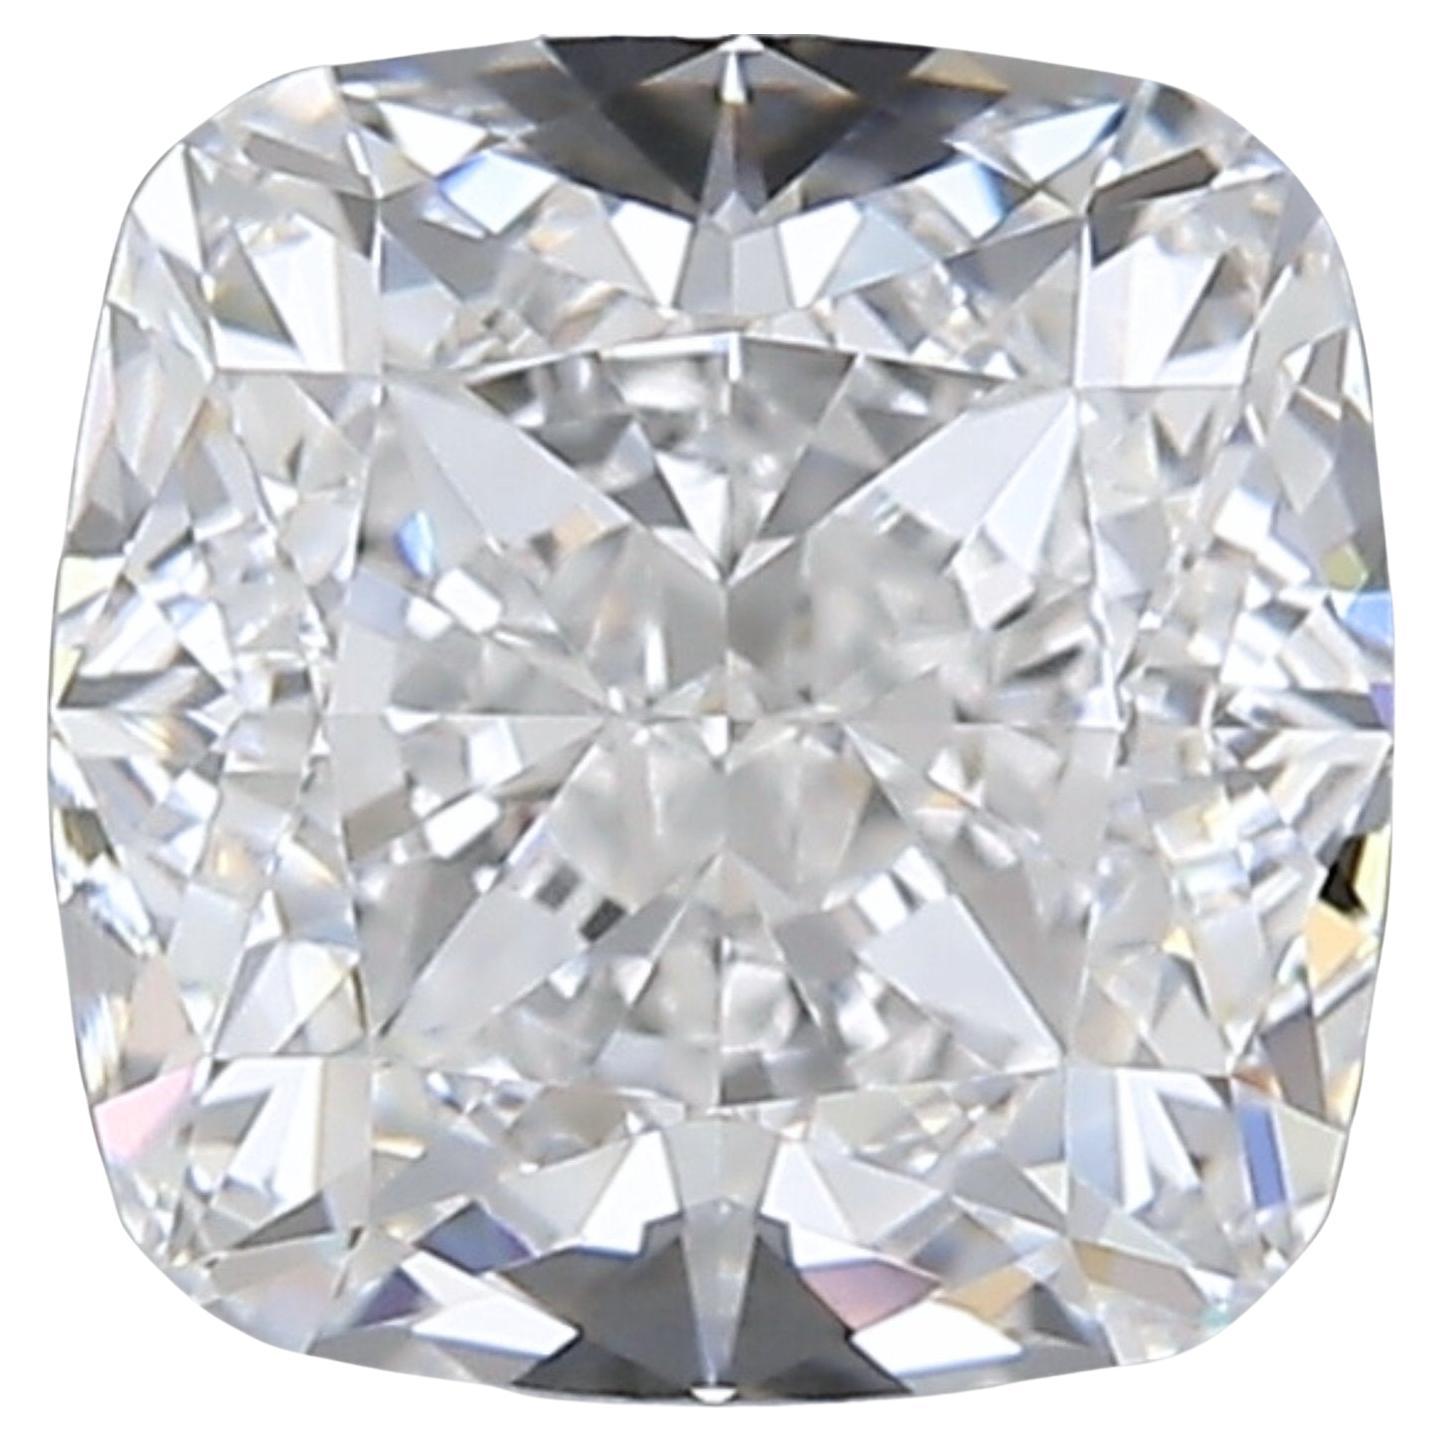 Exquisite Ideal Cut 1pc Natural Diamond w/1.52ct - IGI Certified For Sale